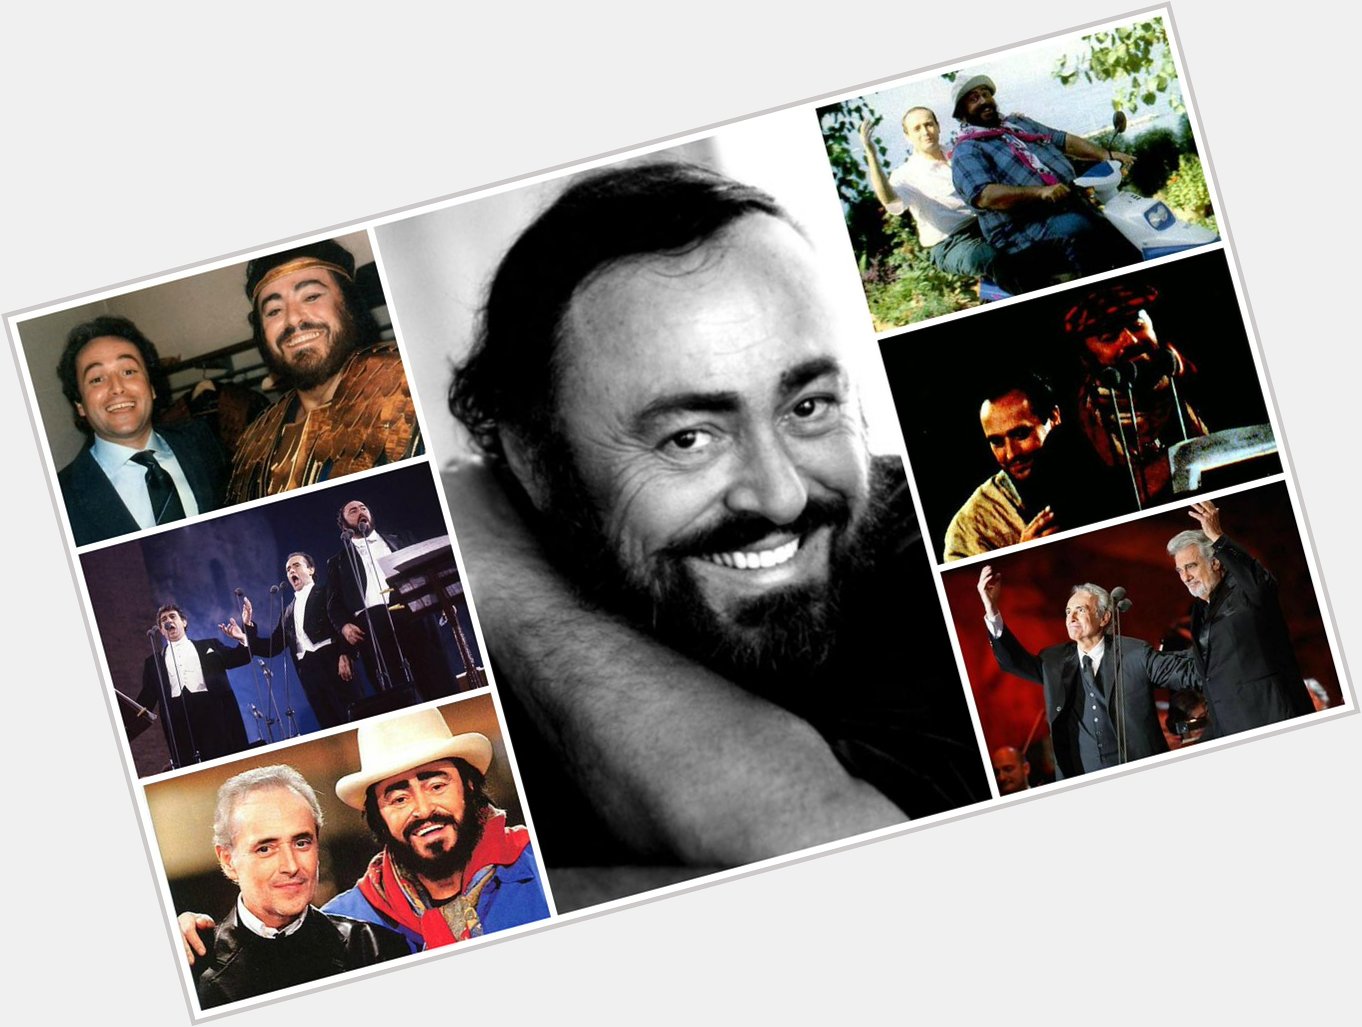 80 years ago today Luciano Pavarotti was born in Modena. Wherever you are, Happy Birthday Luciano!! 